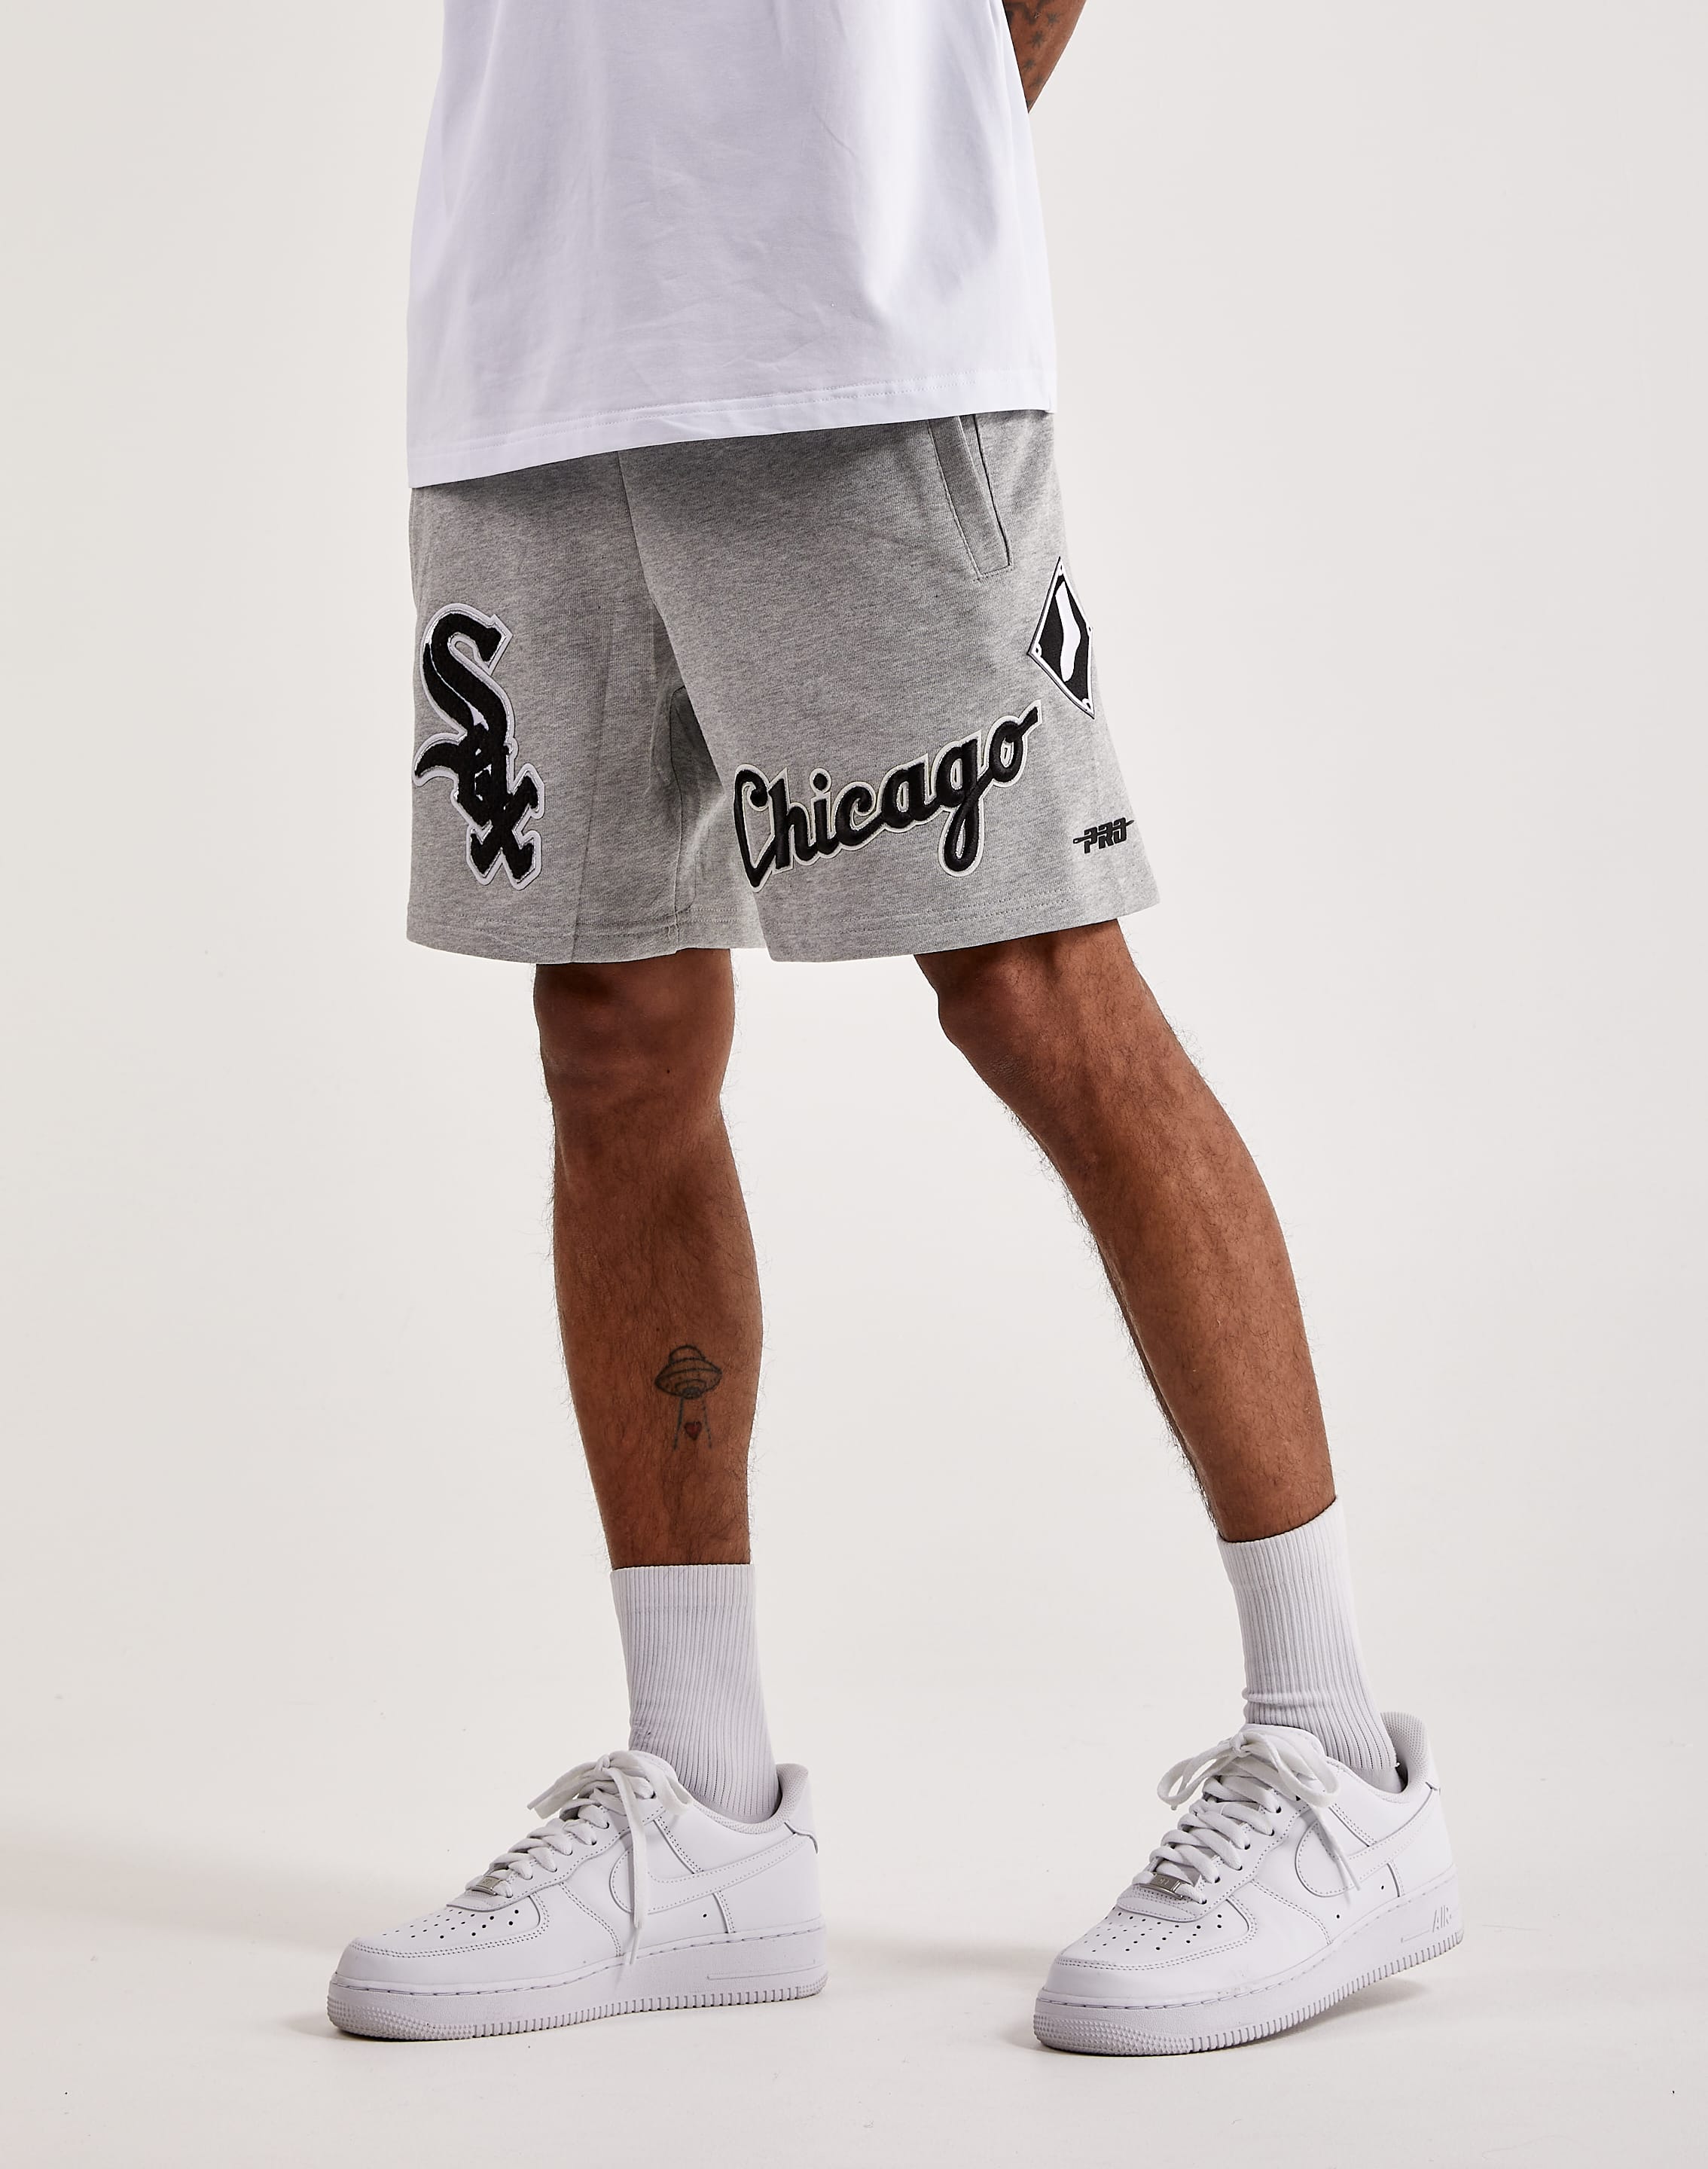 chicago white sox shorts